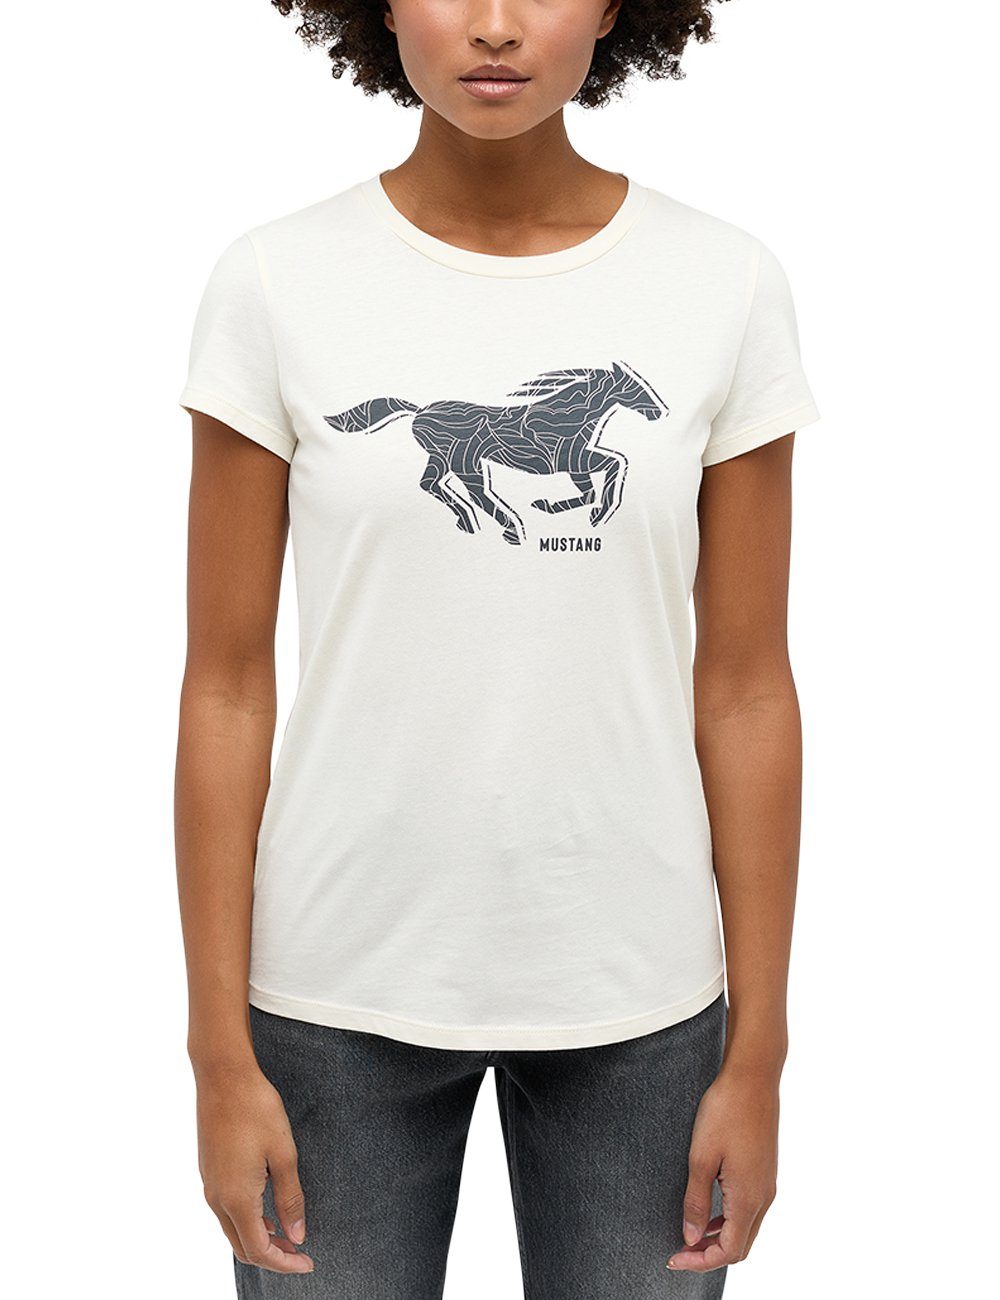 Print-Shirt Mustang T-Shirt offwhite MUSTANG Kurzarmshirt